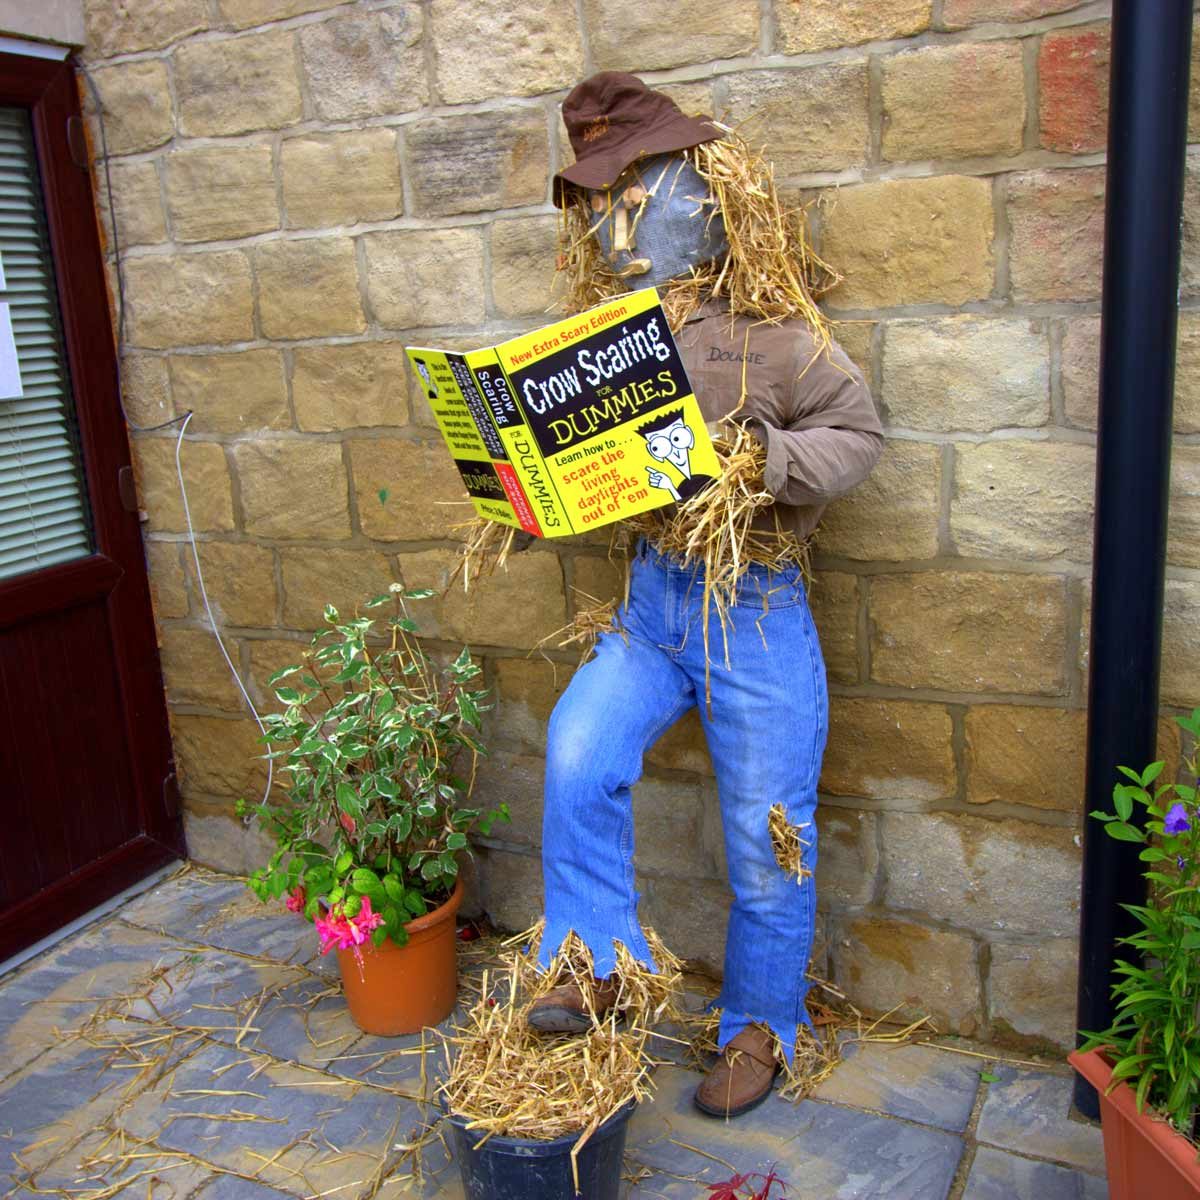 Funny Scarecrow Ideas